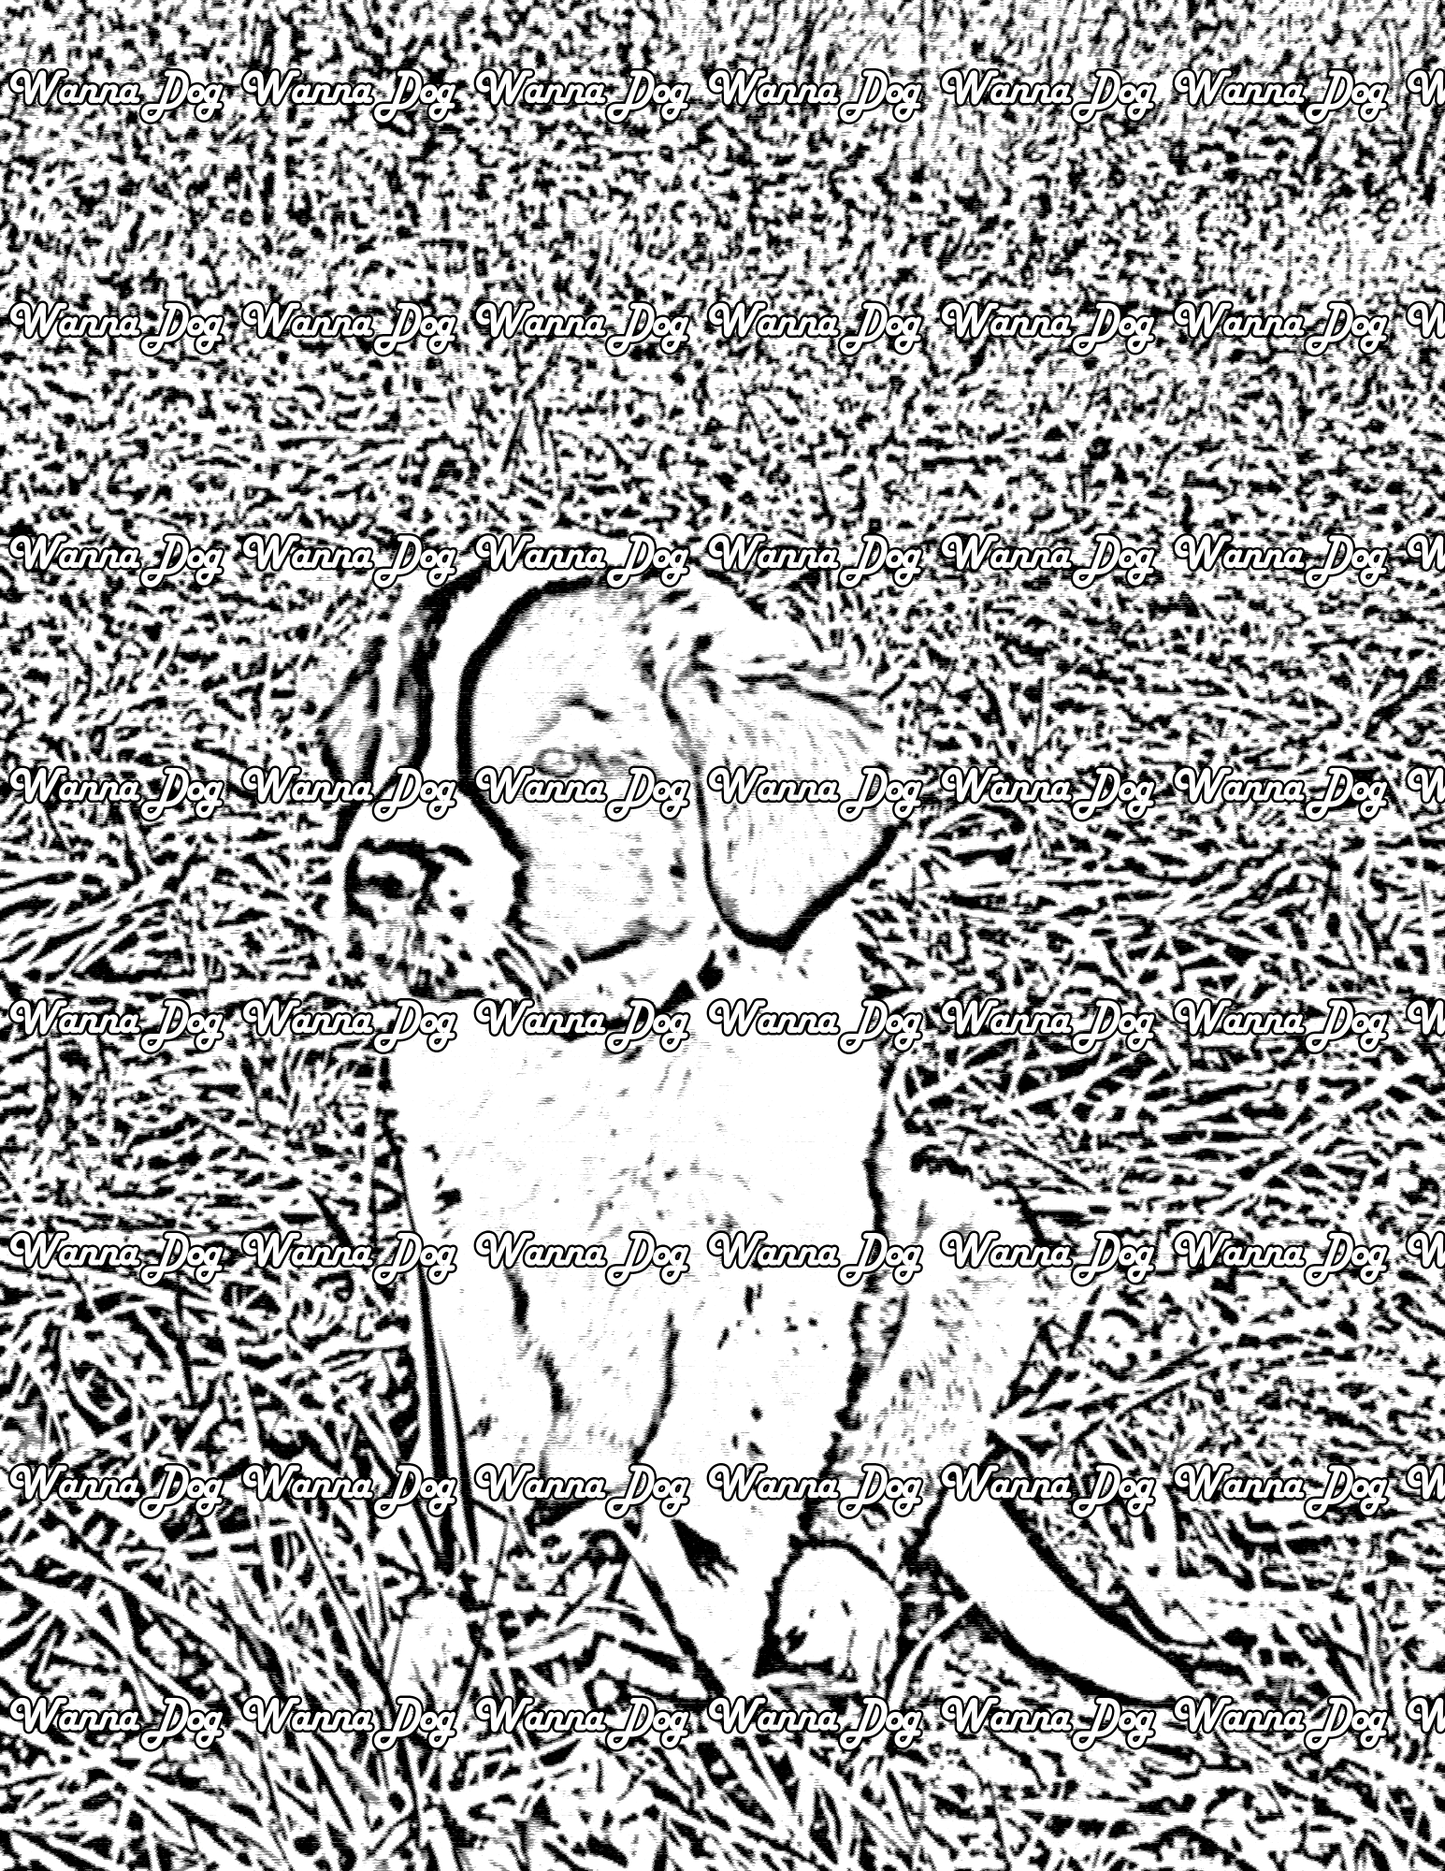 Saint Bernard Coloring Page of a Saint Bernard puppy sitting in the grass